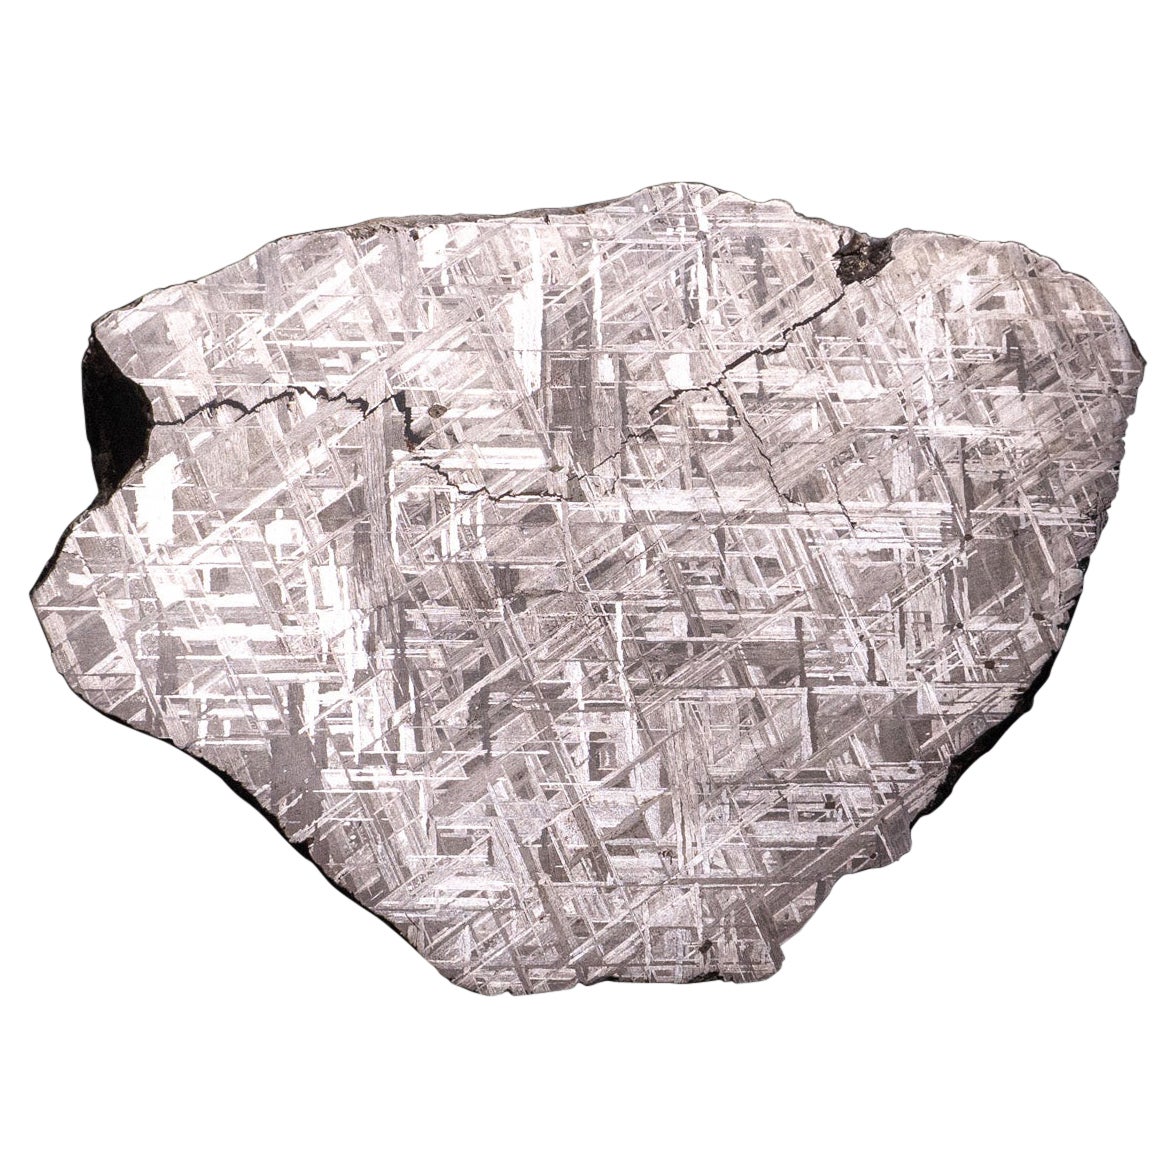 Genuine Muonionalusta Meteorite Slab (7.5 lbs) For Sale